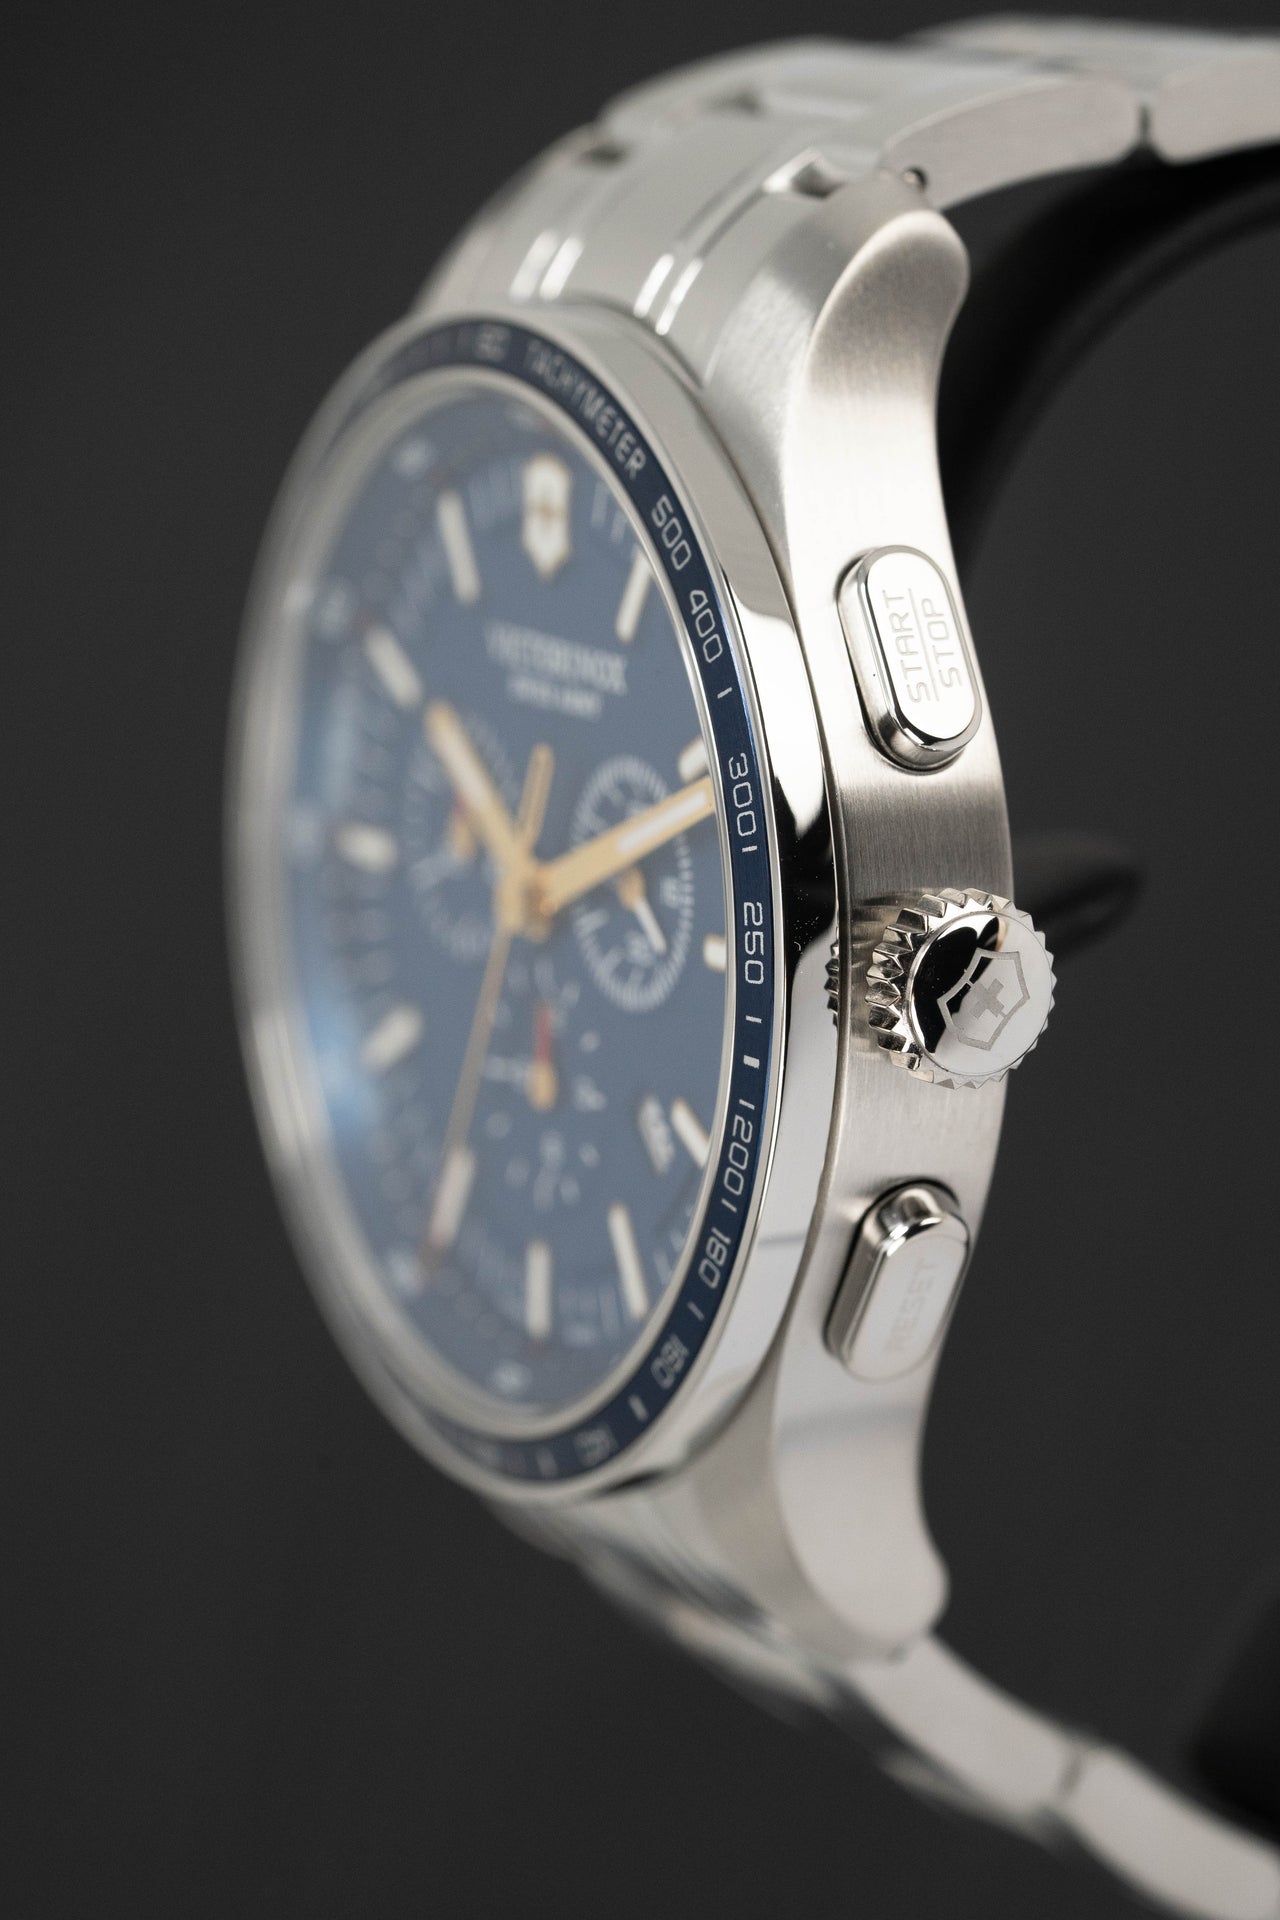 Victorinox Men's Watch Chronograph Alliance Sport Blue 241817